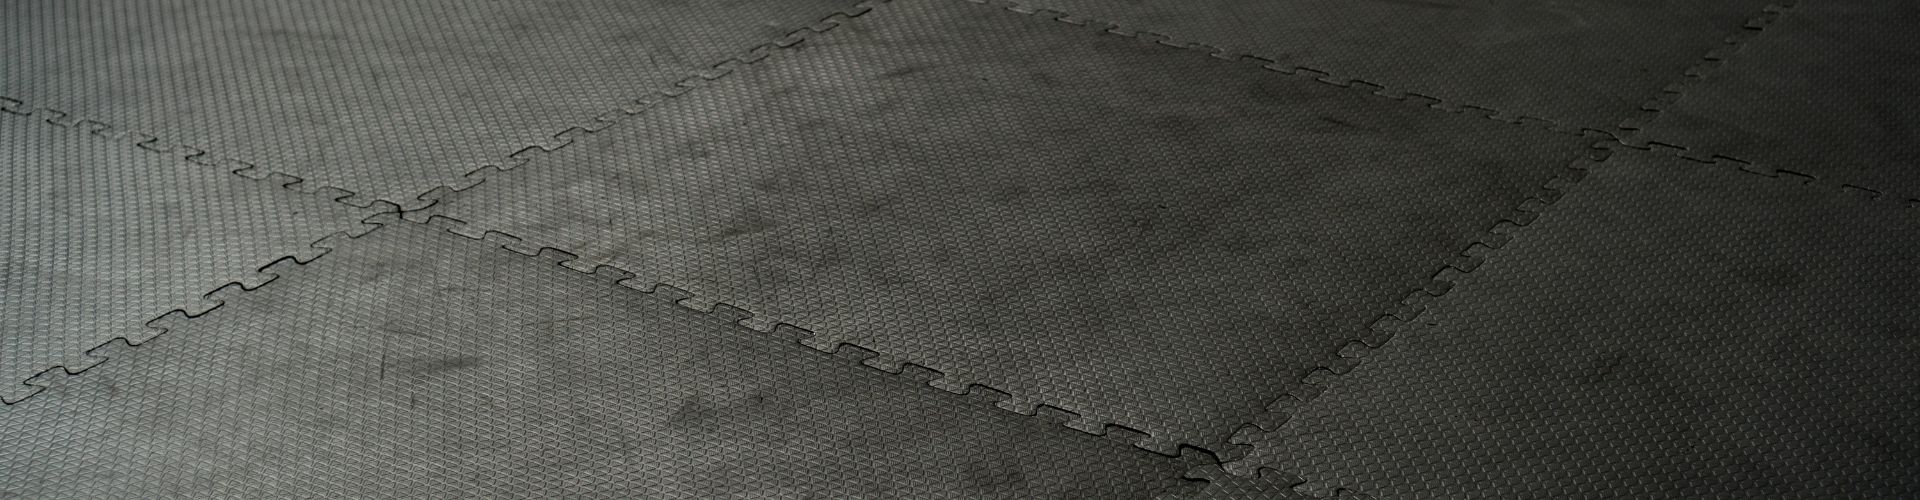 treadmill protective floor mat